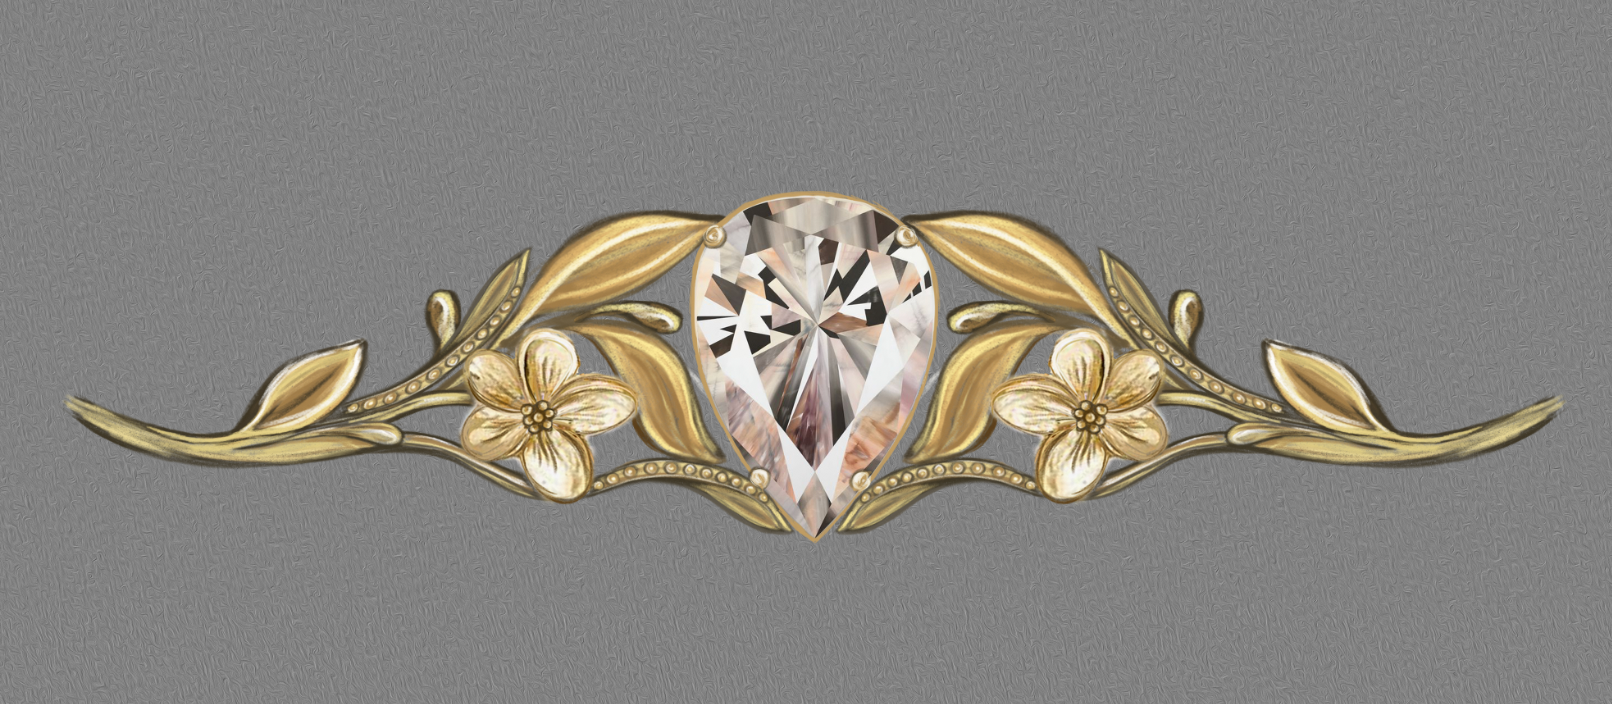 Bespoke engagement ring design - Eden Garden Jewelry™